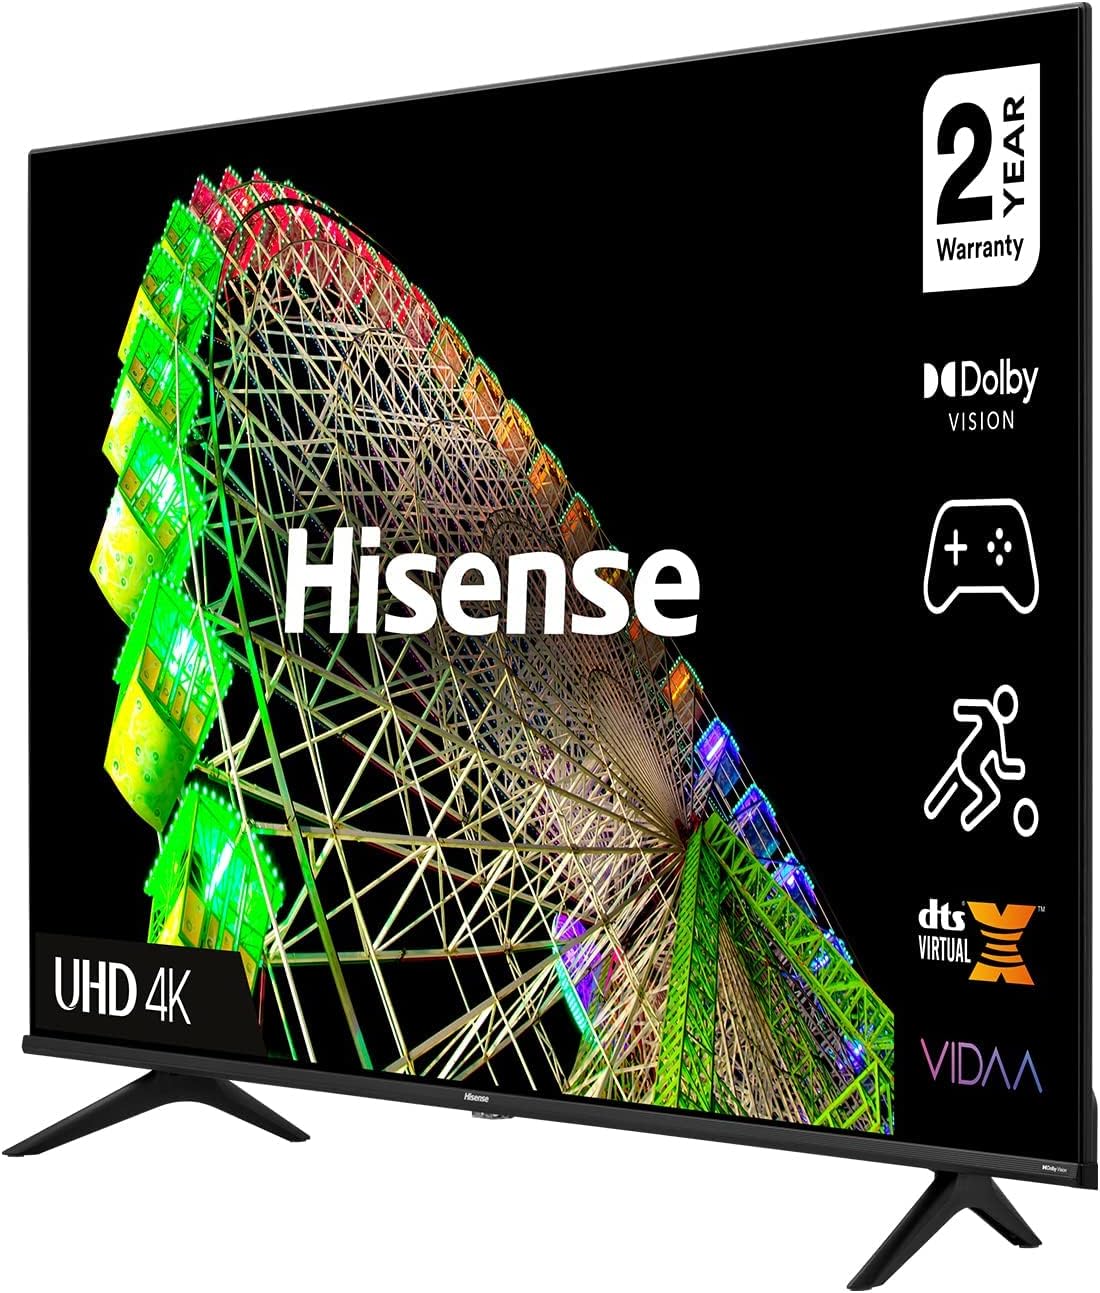 Hisense 43A6BGTUK 43" Smart 4K Ultra HD HDR LED TV - Good